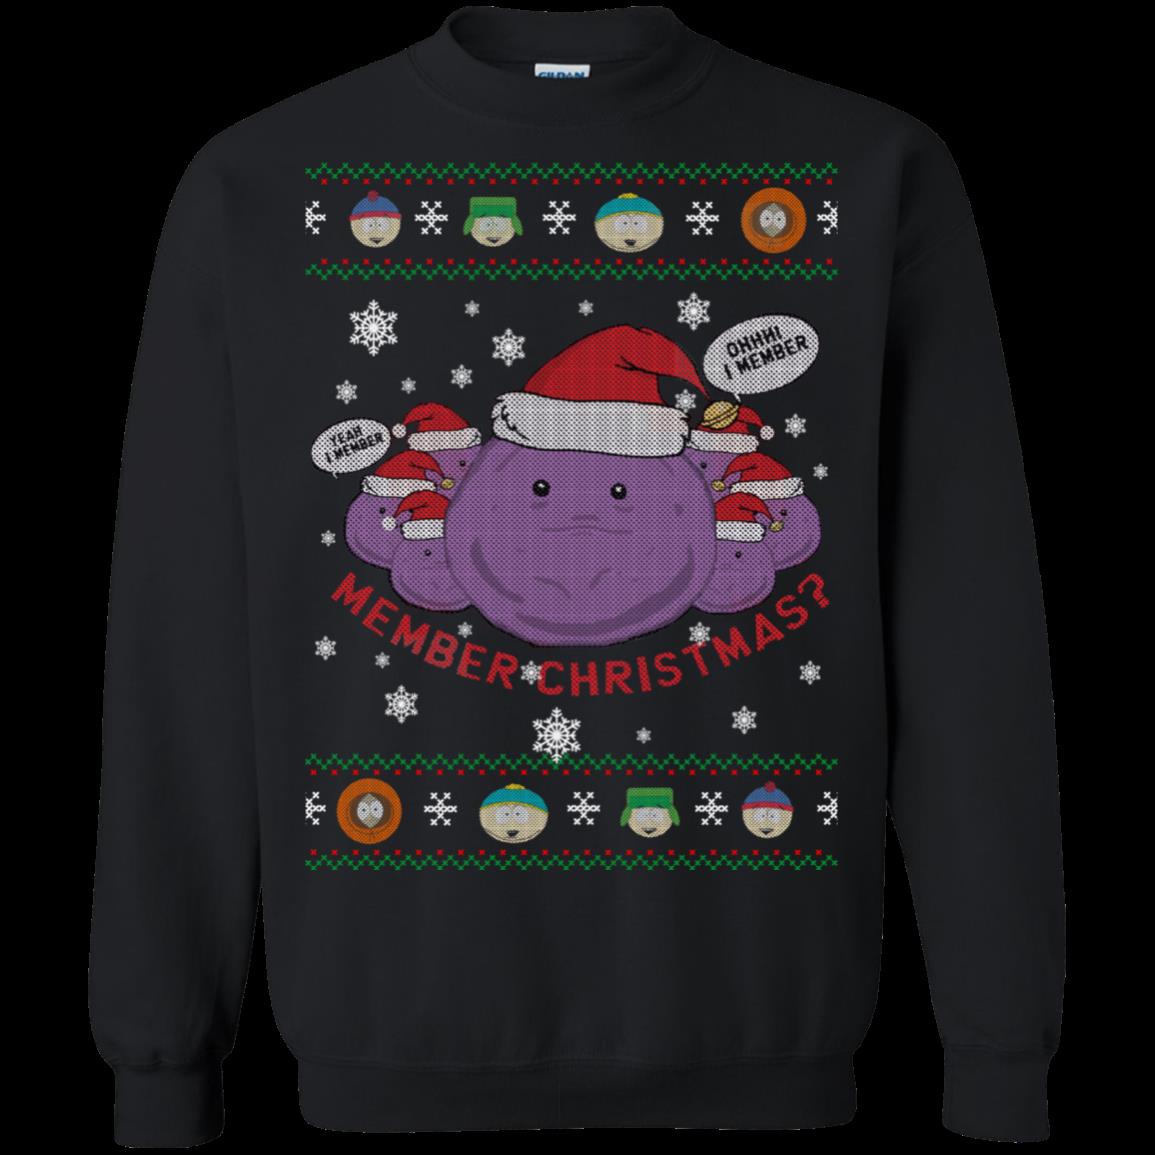 South Park Member Berries Ugly Christmas Sweater Shirts T Shirt Hoodies Sweatshirt